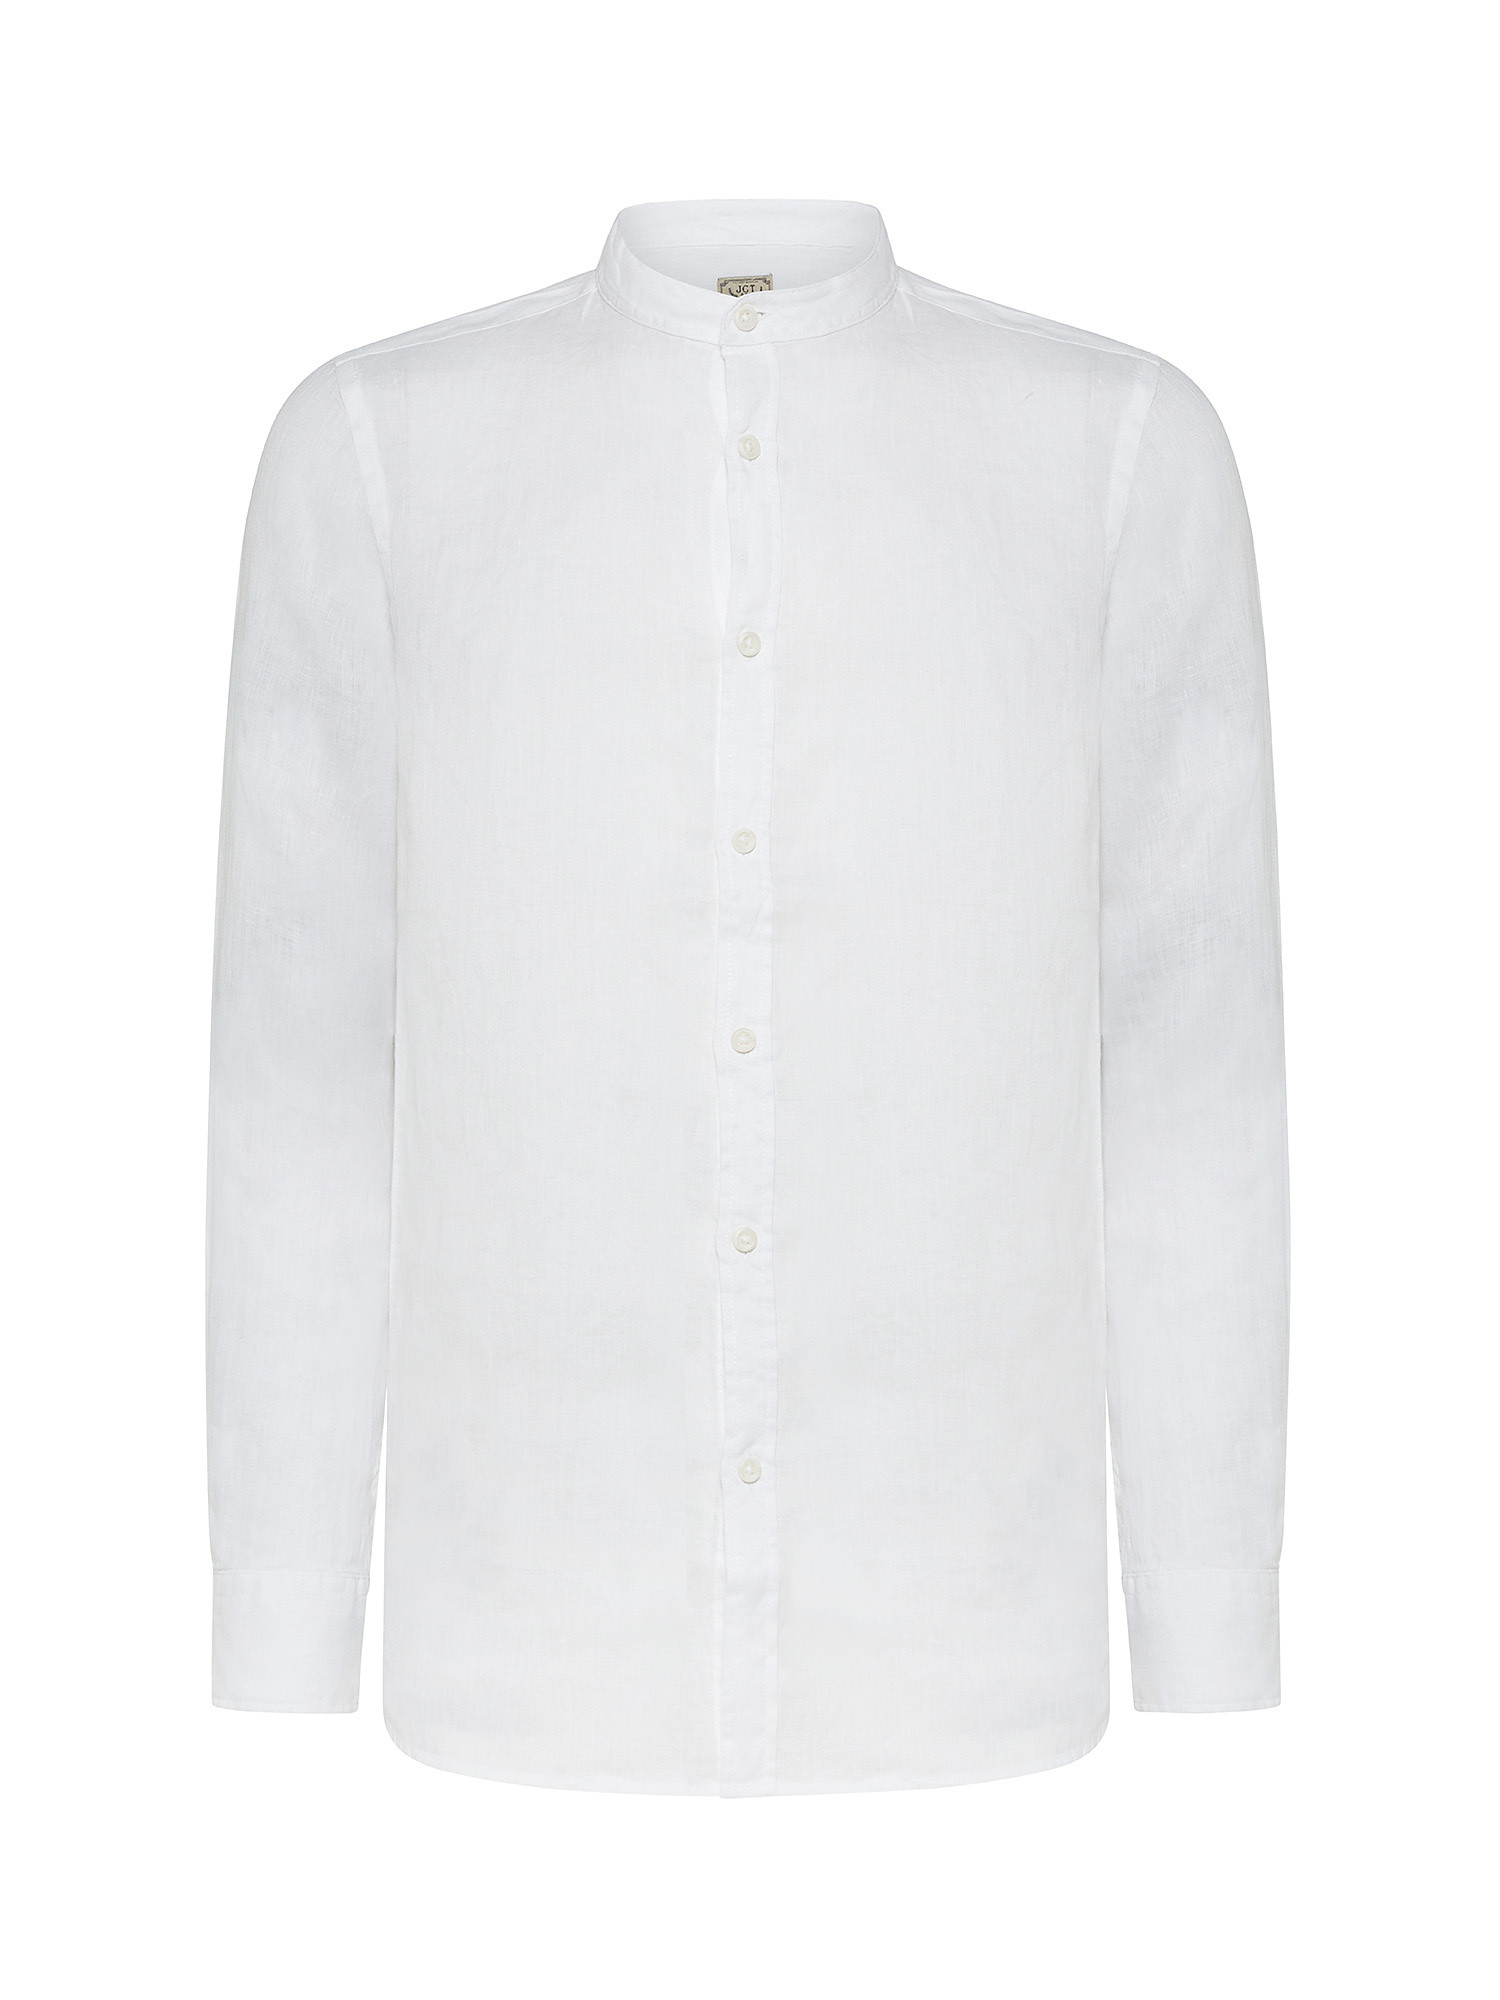 JCT - Pure linen Korean shirt, White, large image number 0